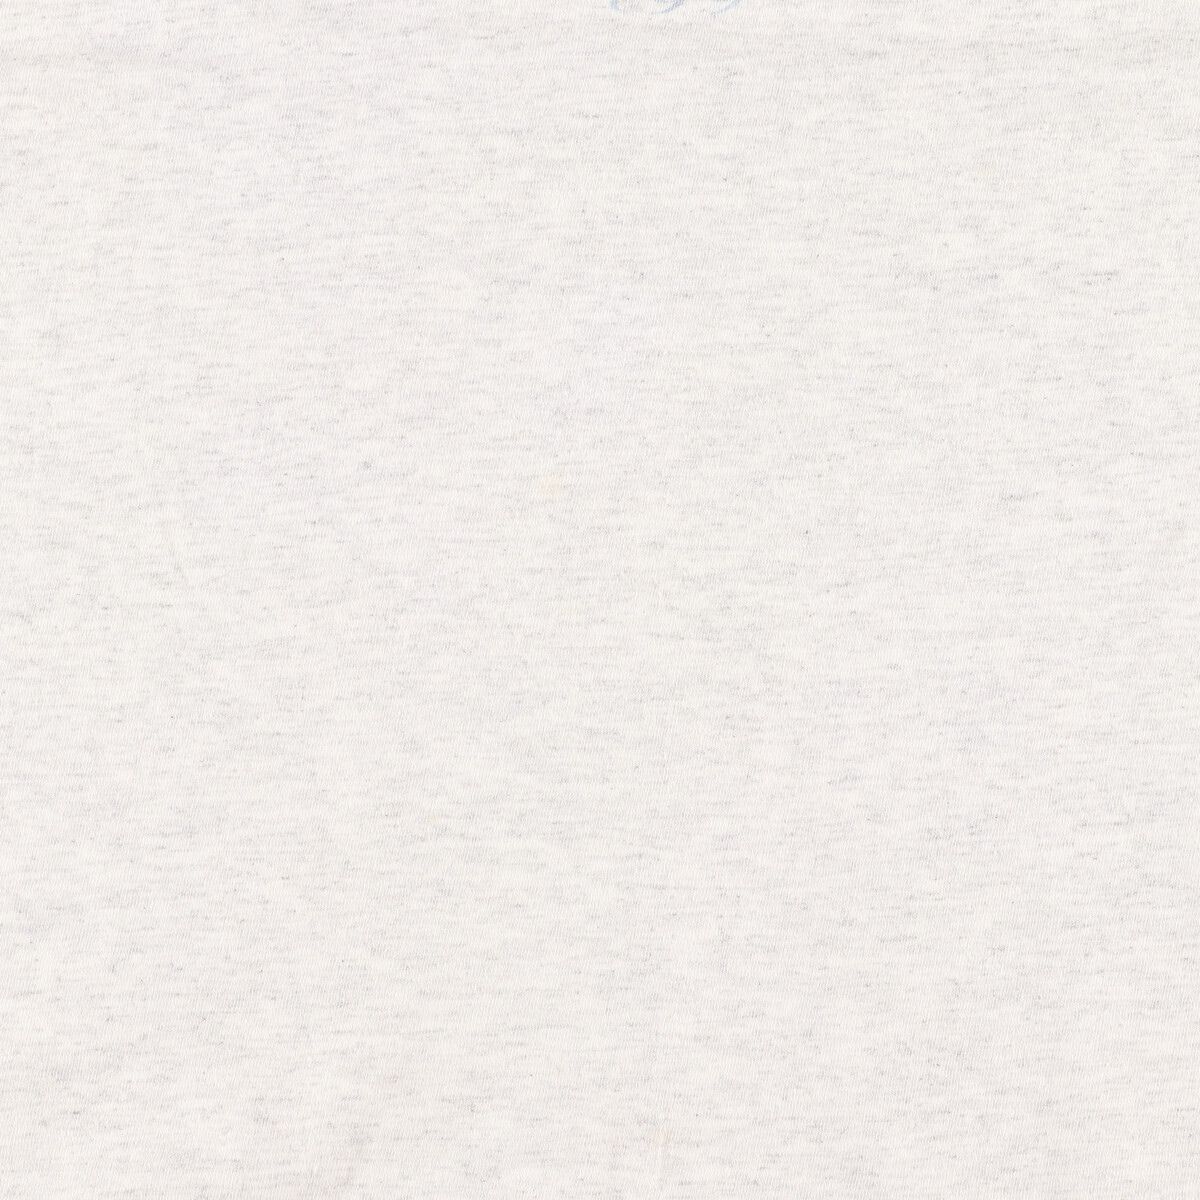 625cm袖丈90年代 DISNEY ORIGINALS WALT DISNEY WORLD ウォルトディズニーワールド キャラクタープリントTシャツ USA製 メンズXL ヴィンテージ /eaa355849